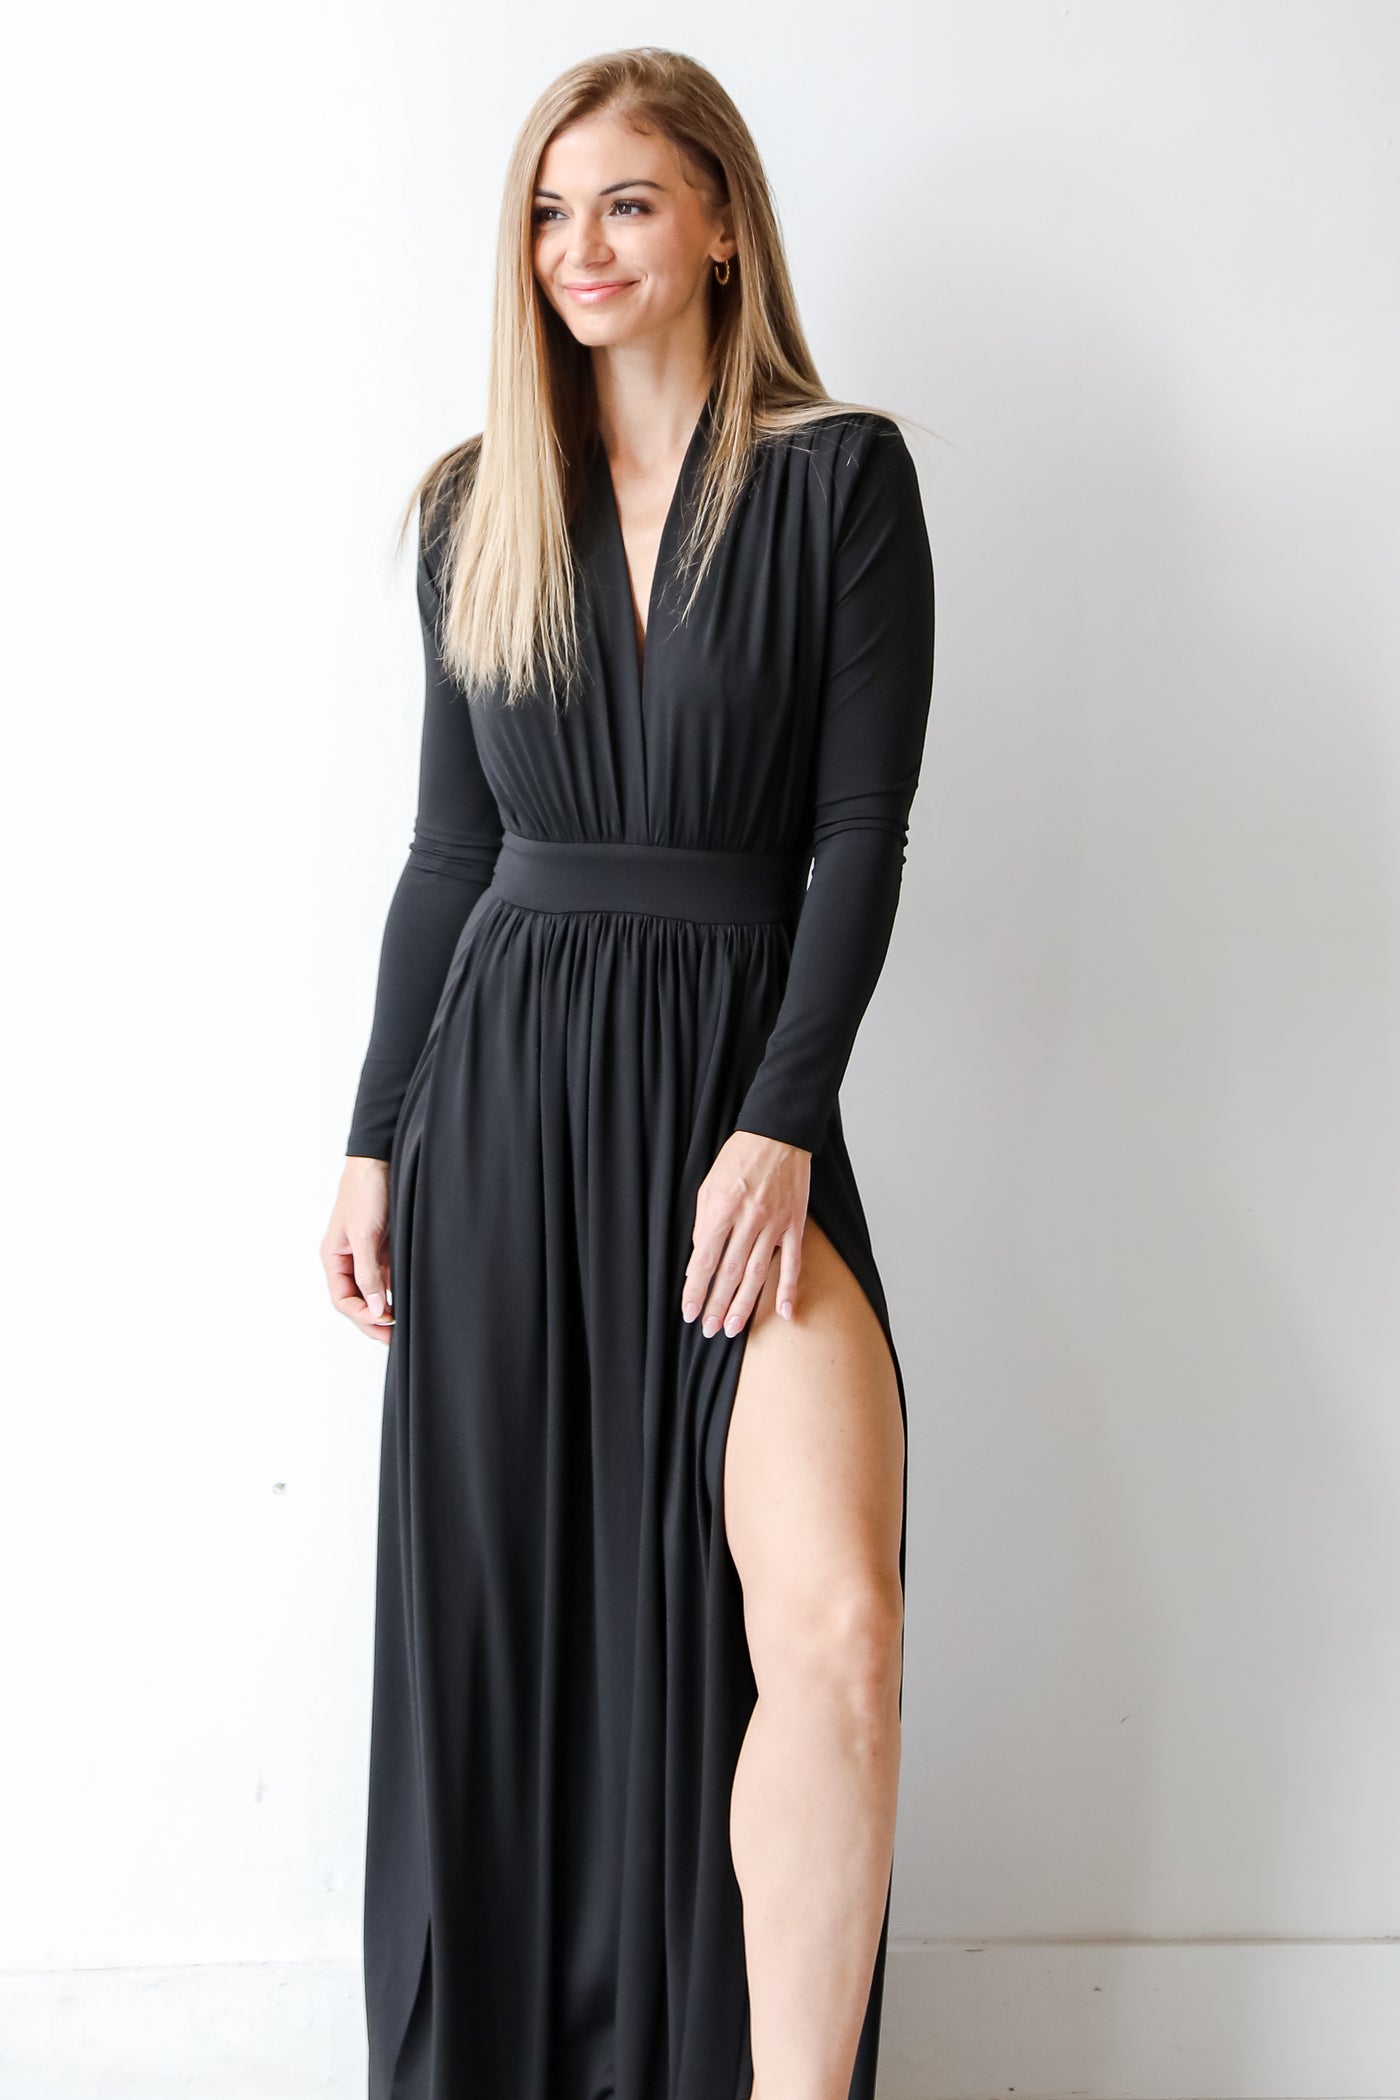 model wearing a black maxi dress